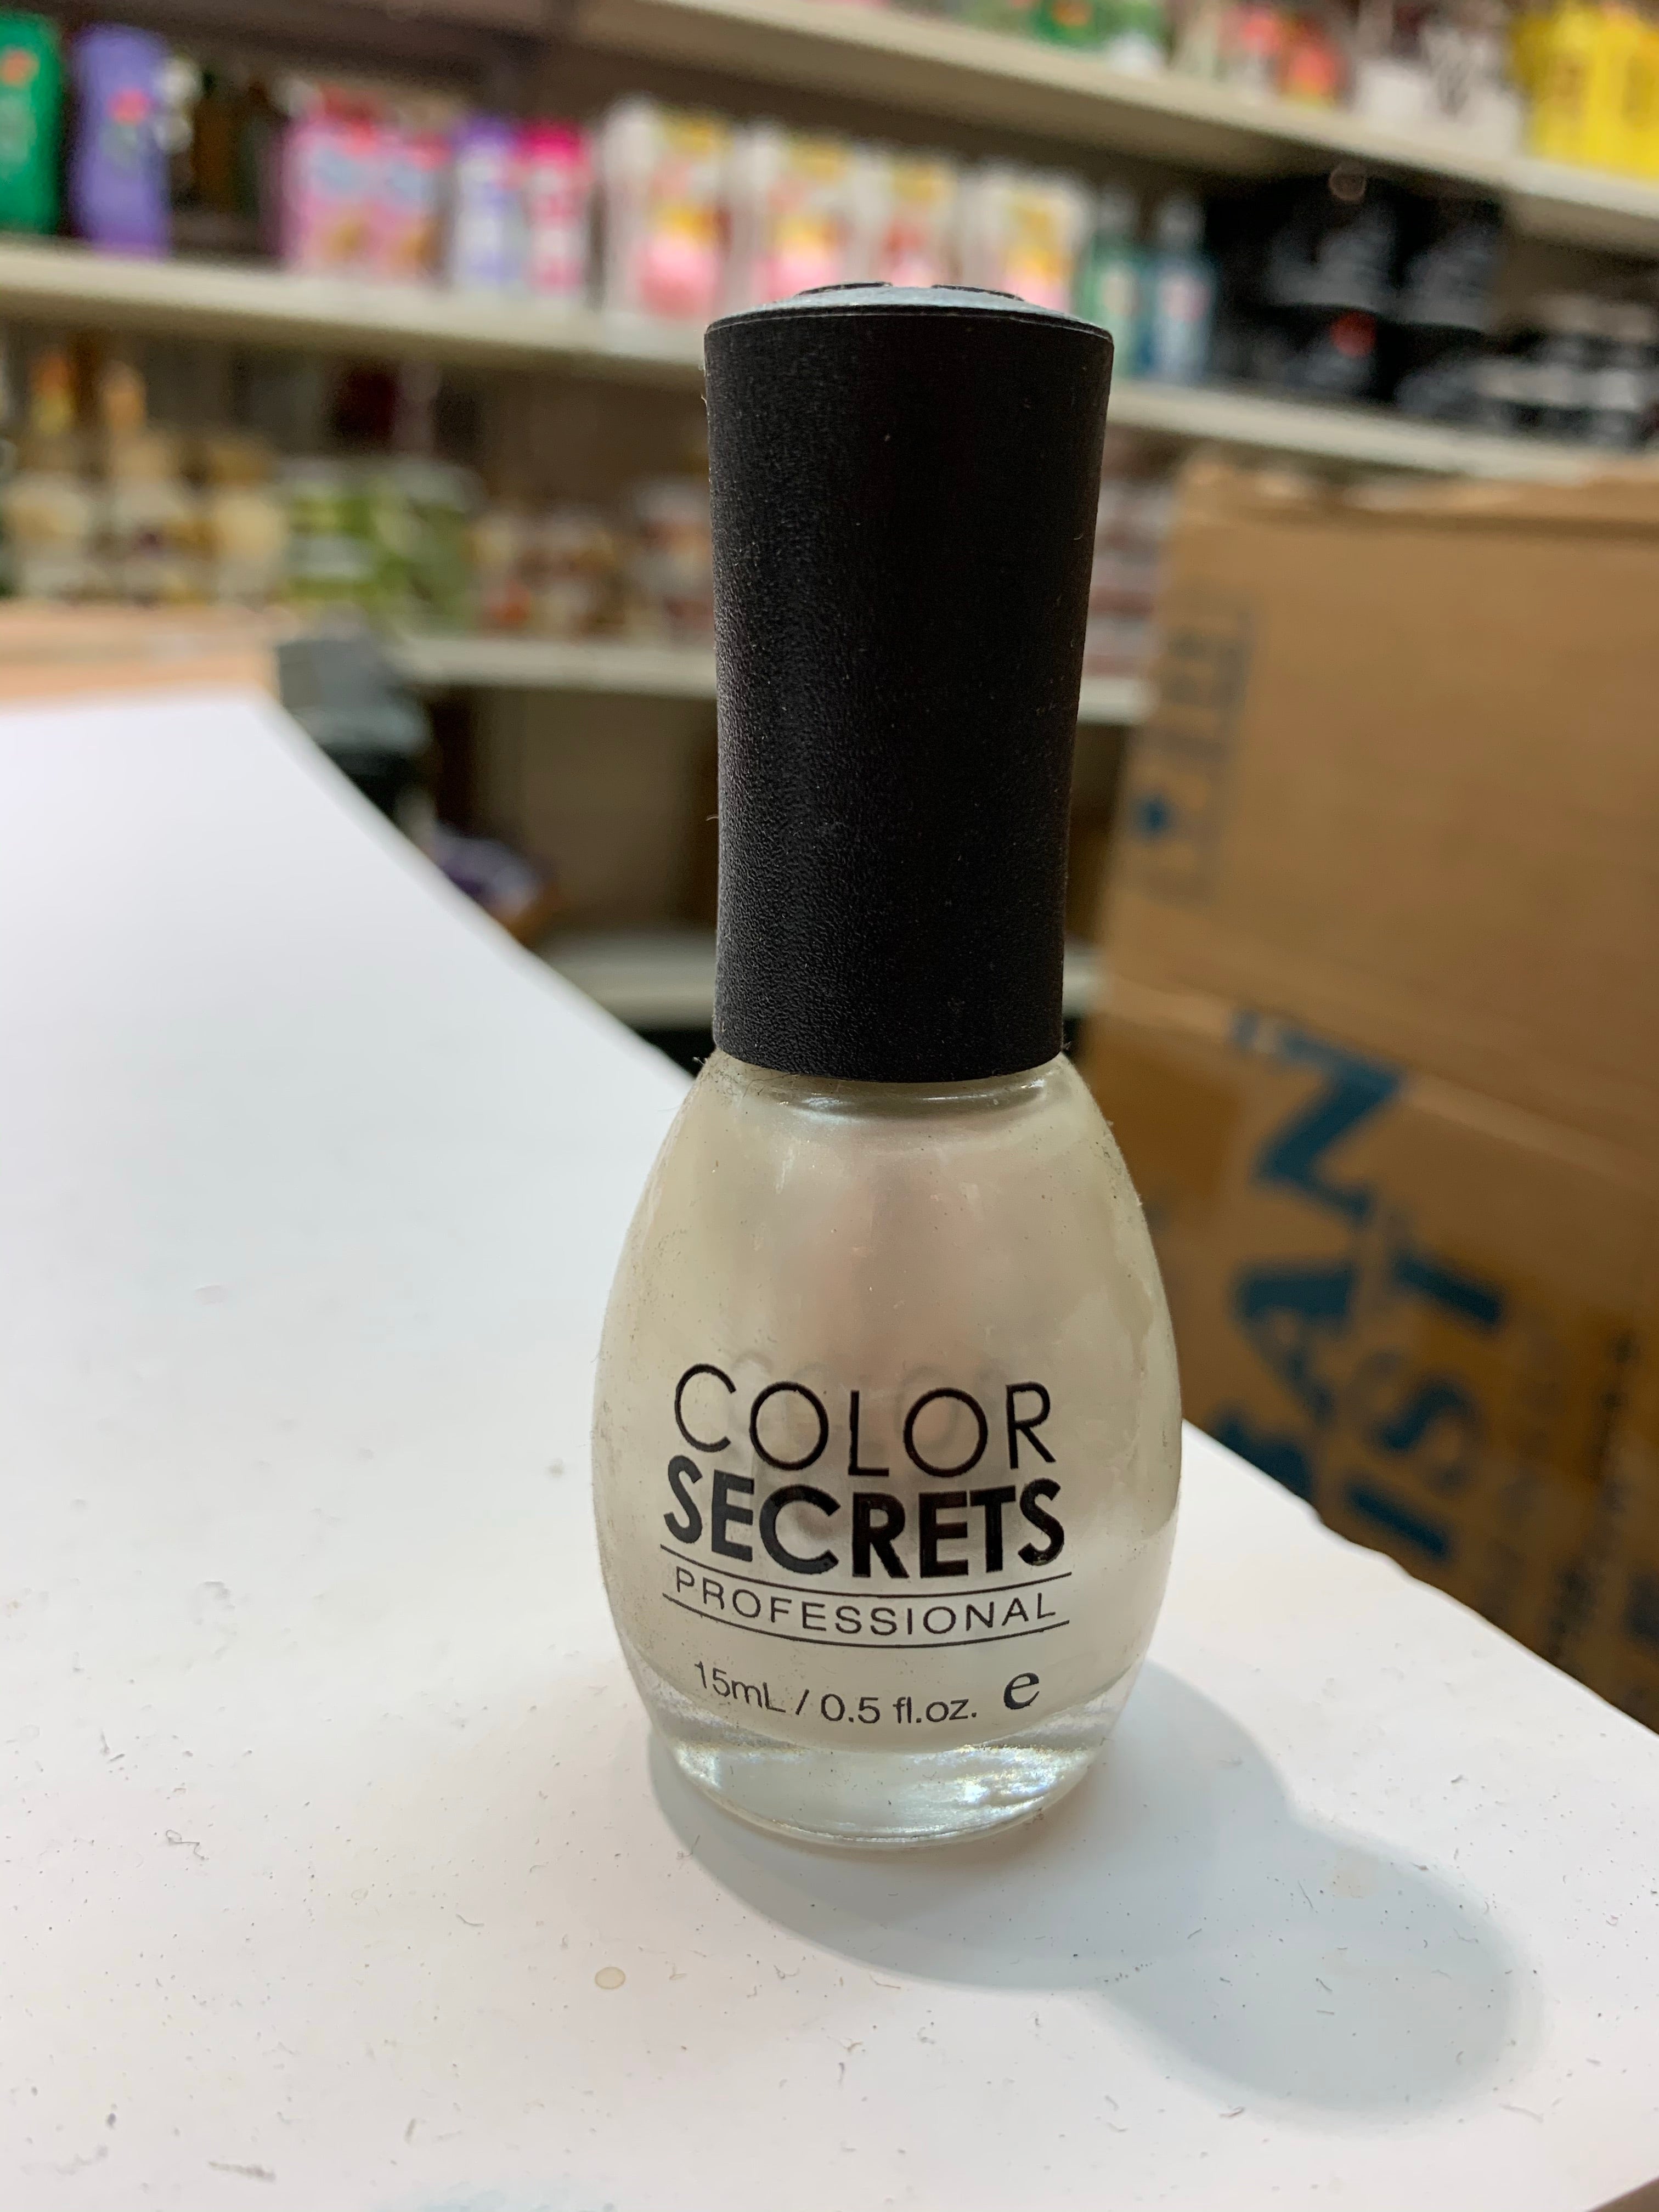 Color secrets nail polish